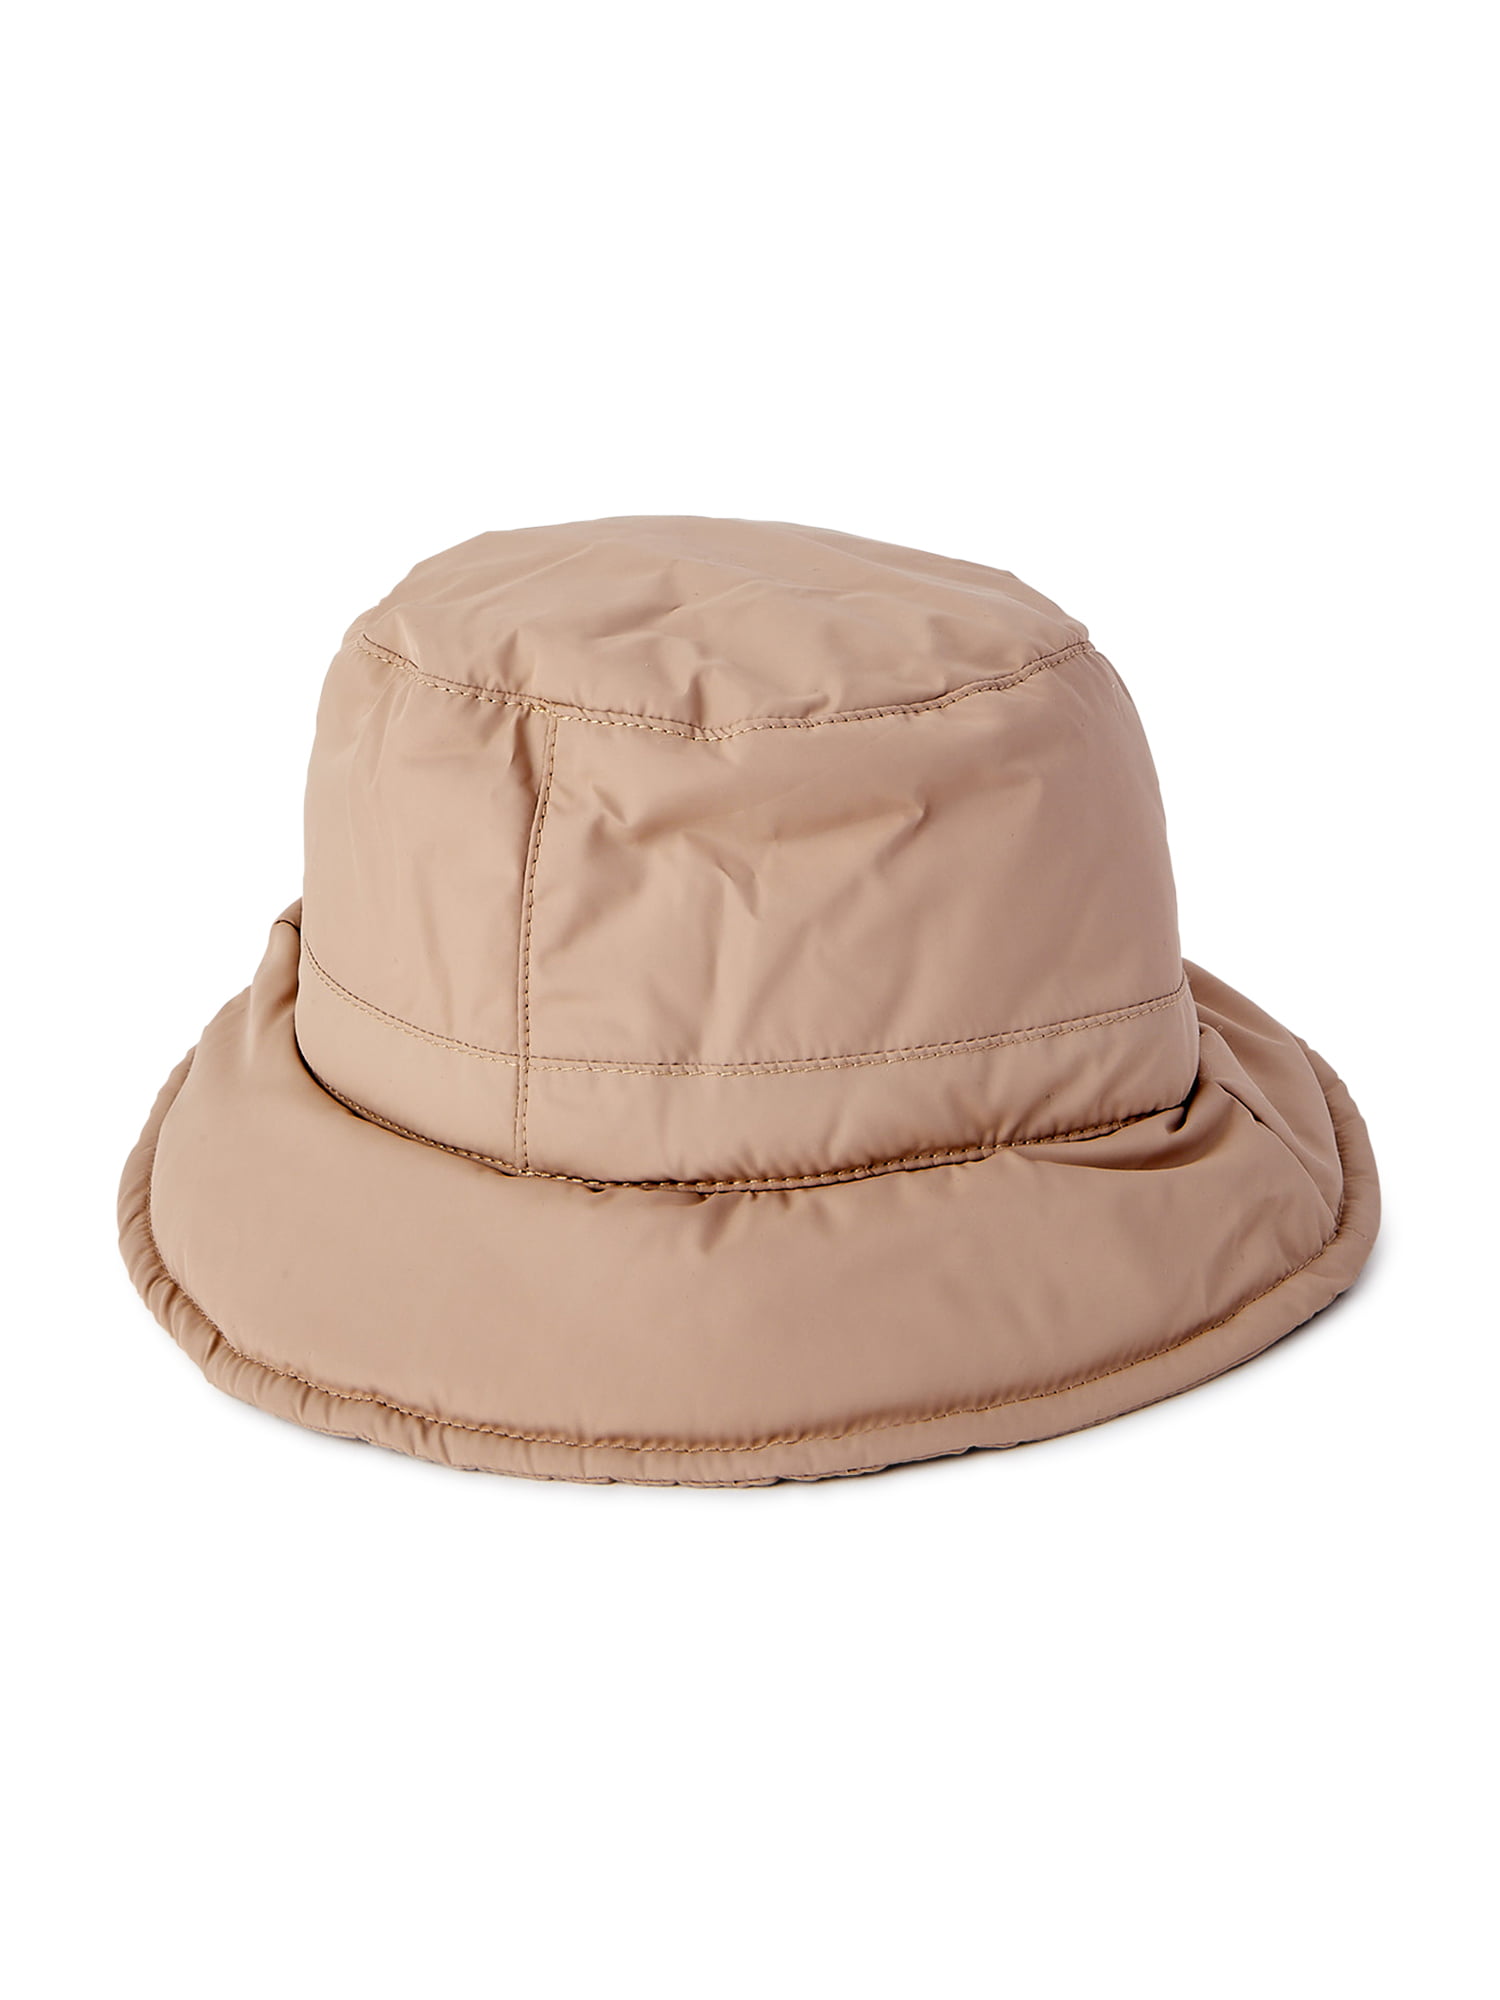 chanel leather bucket hat